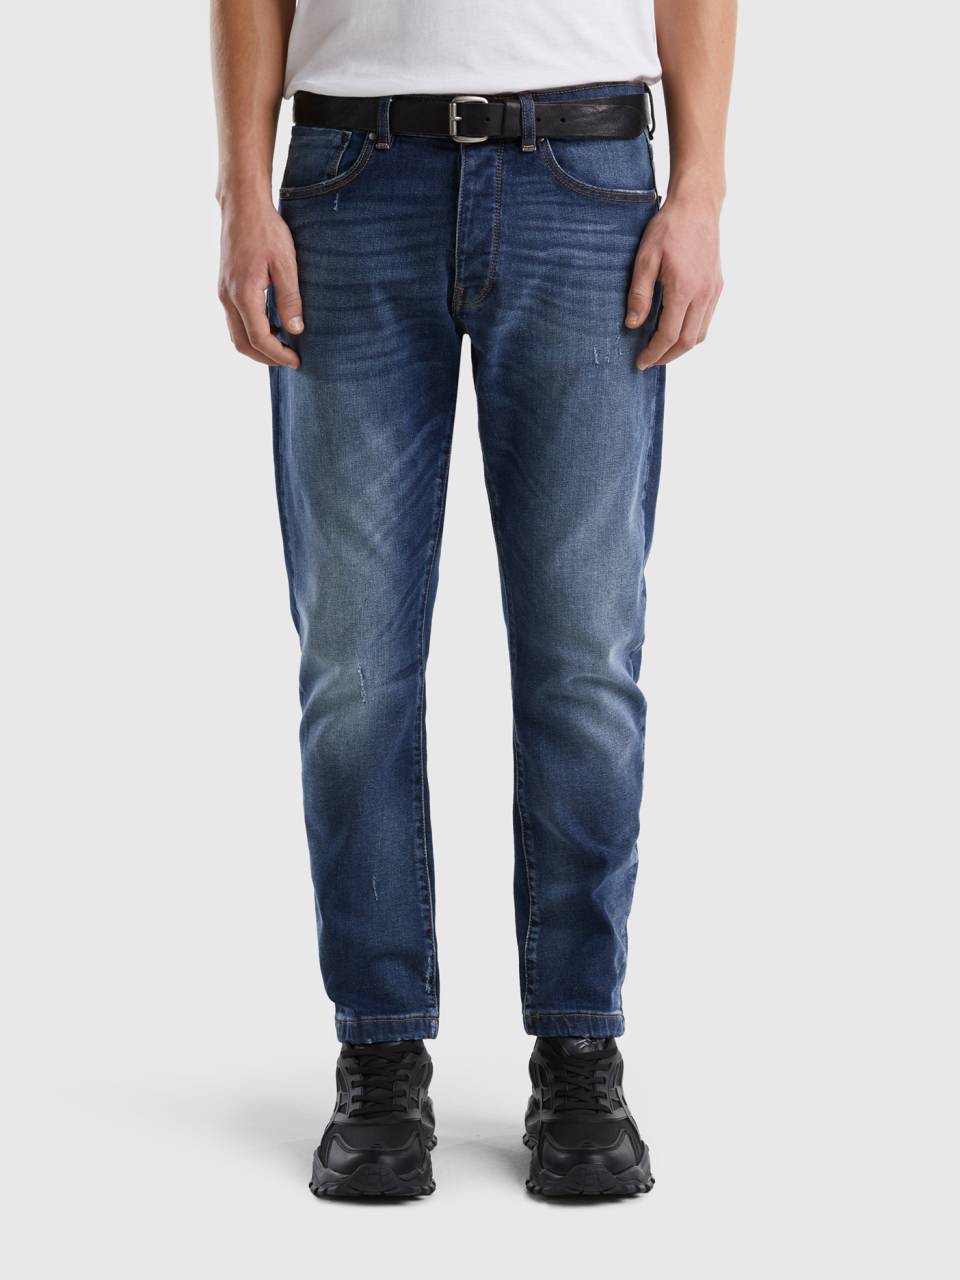 Benetton Five-pocket slim fit jeans. 1